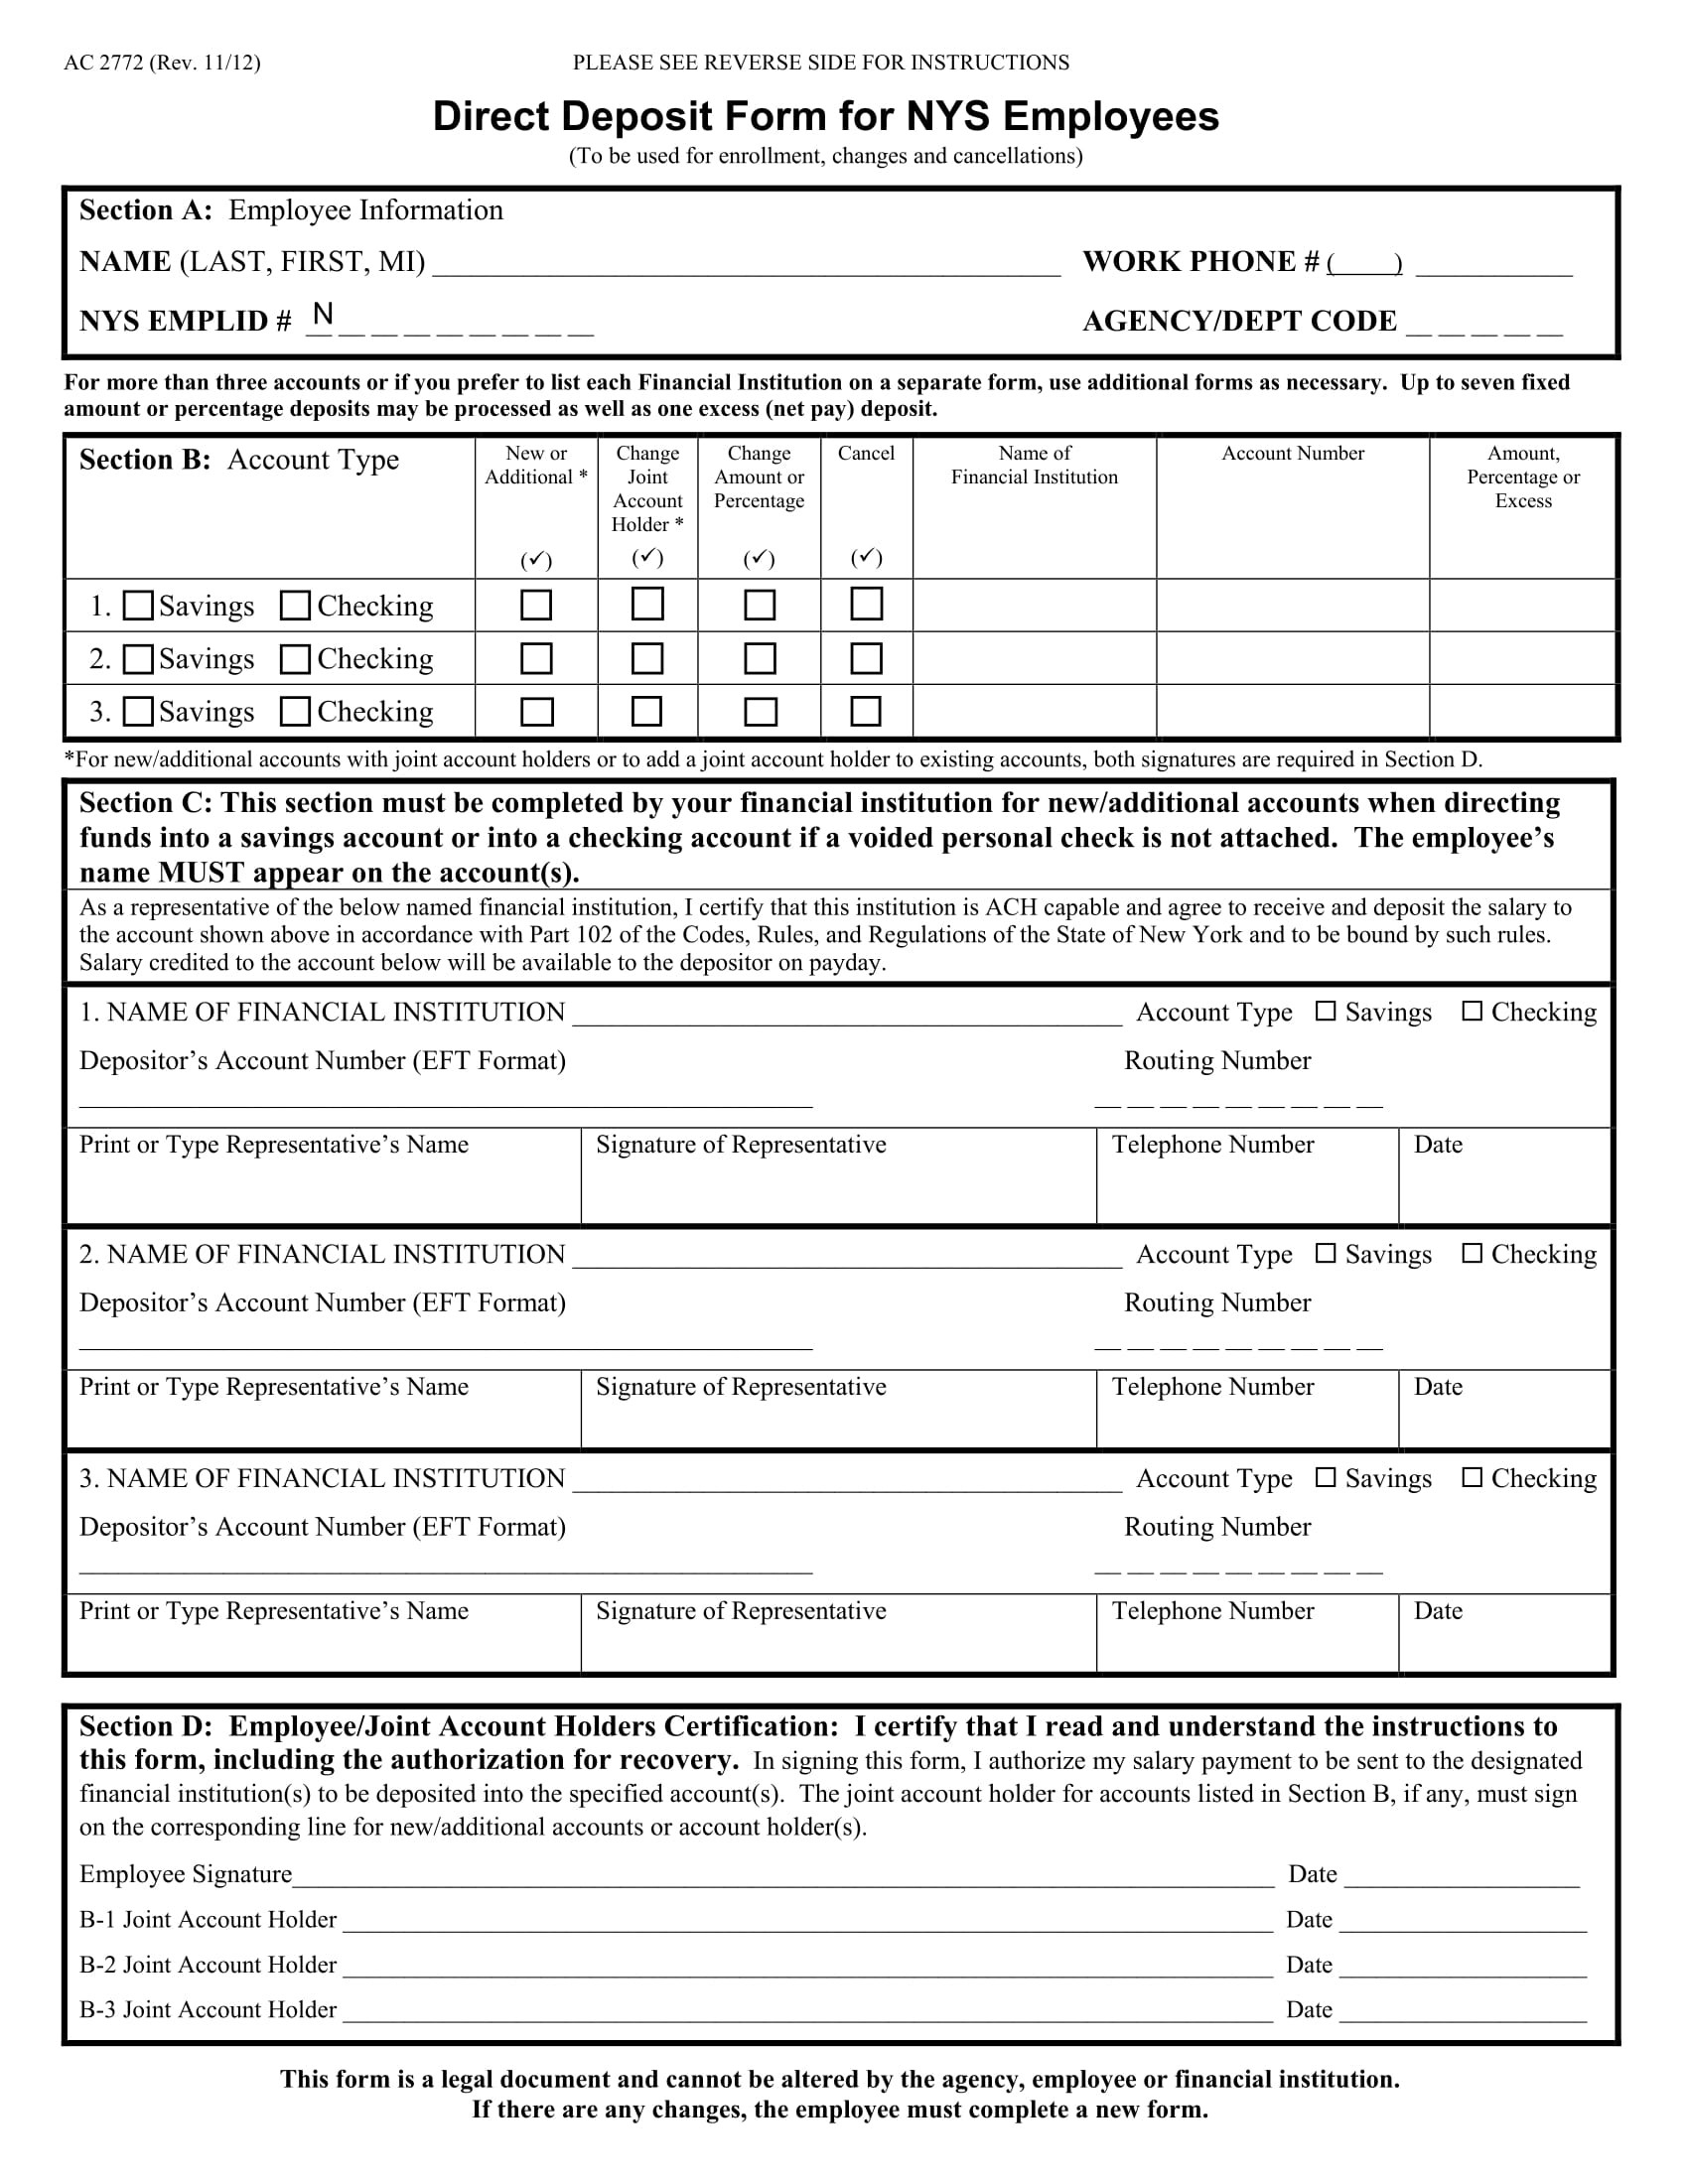 state employee direct deposit enrollment form 1